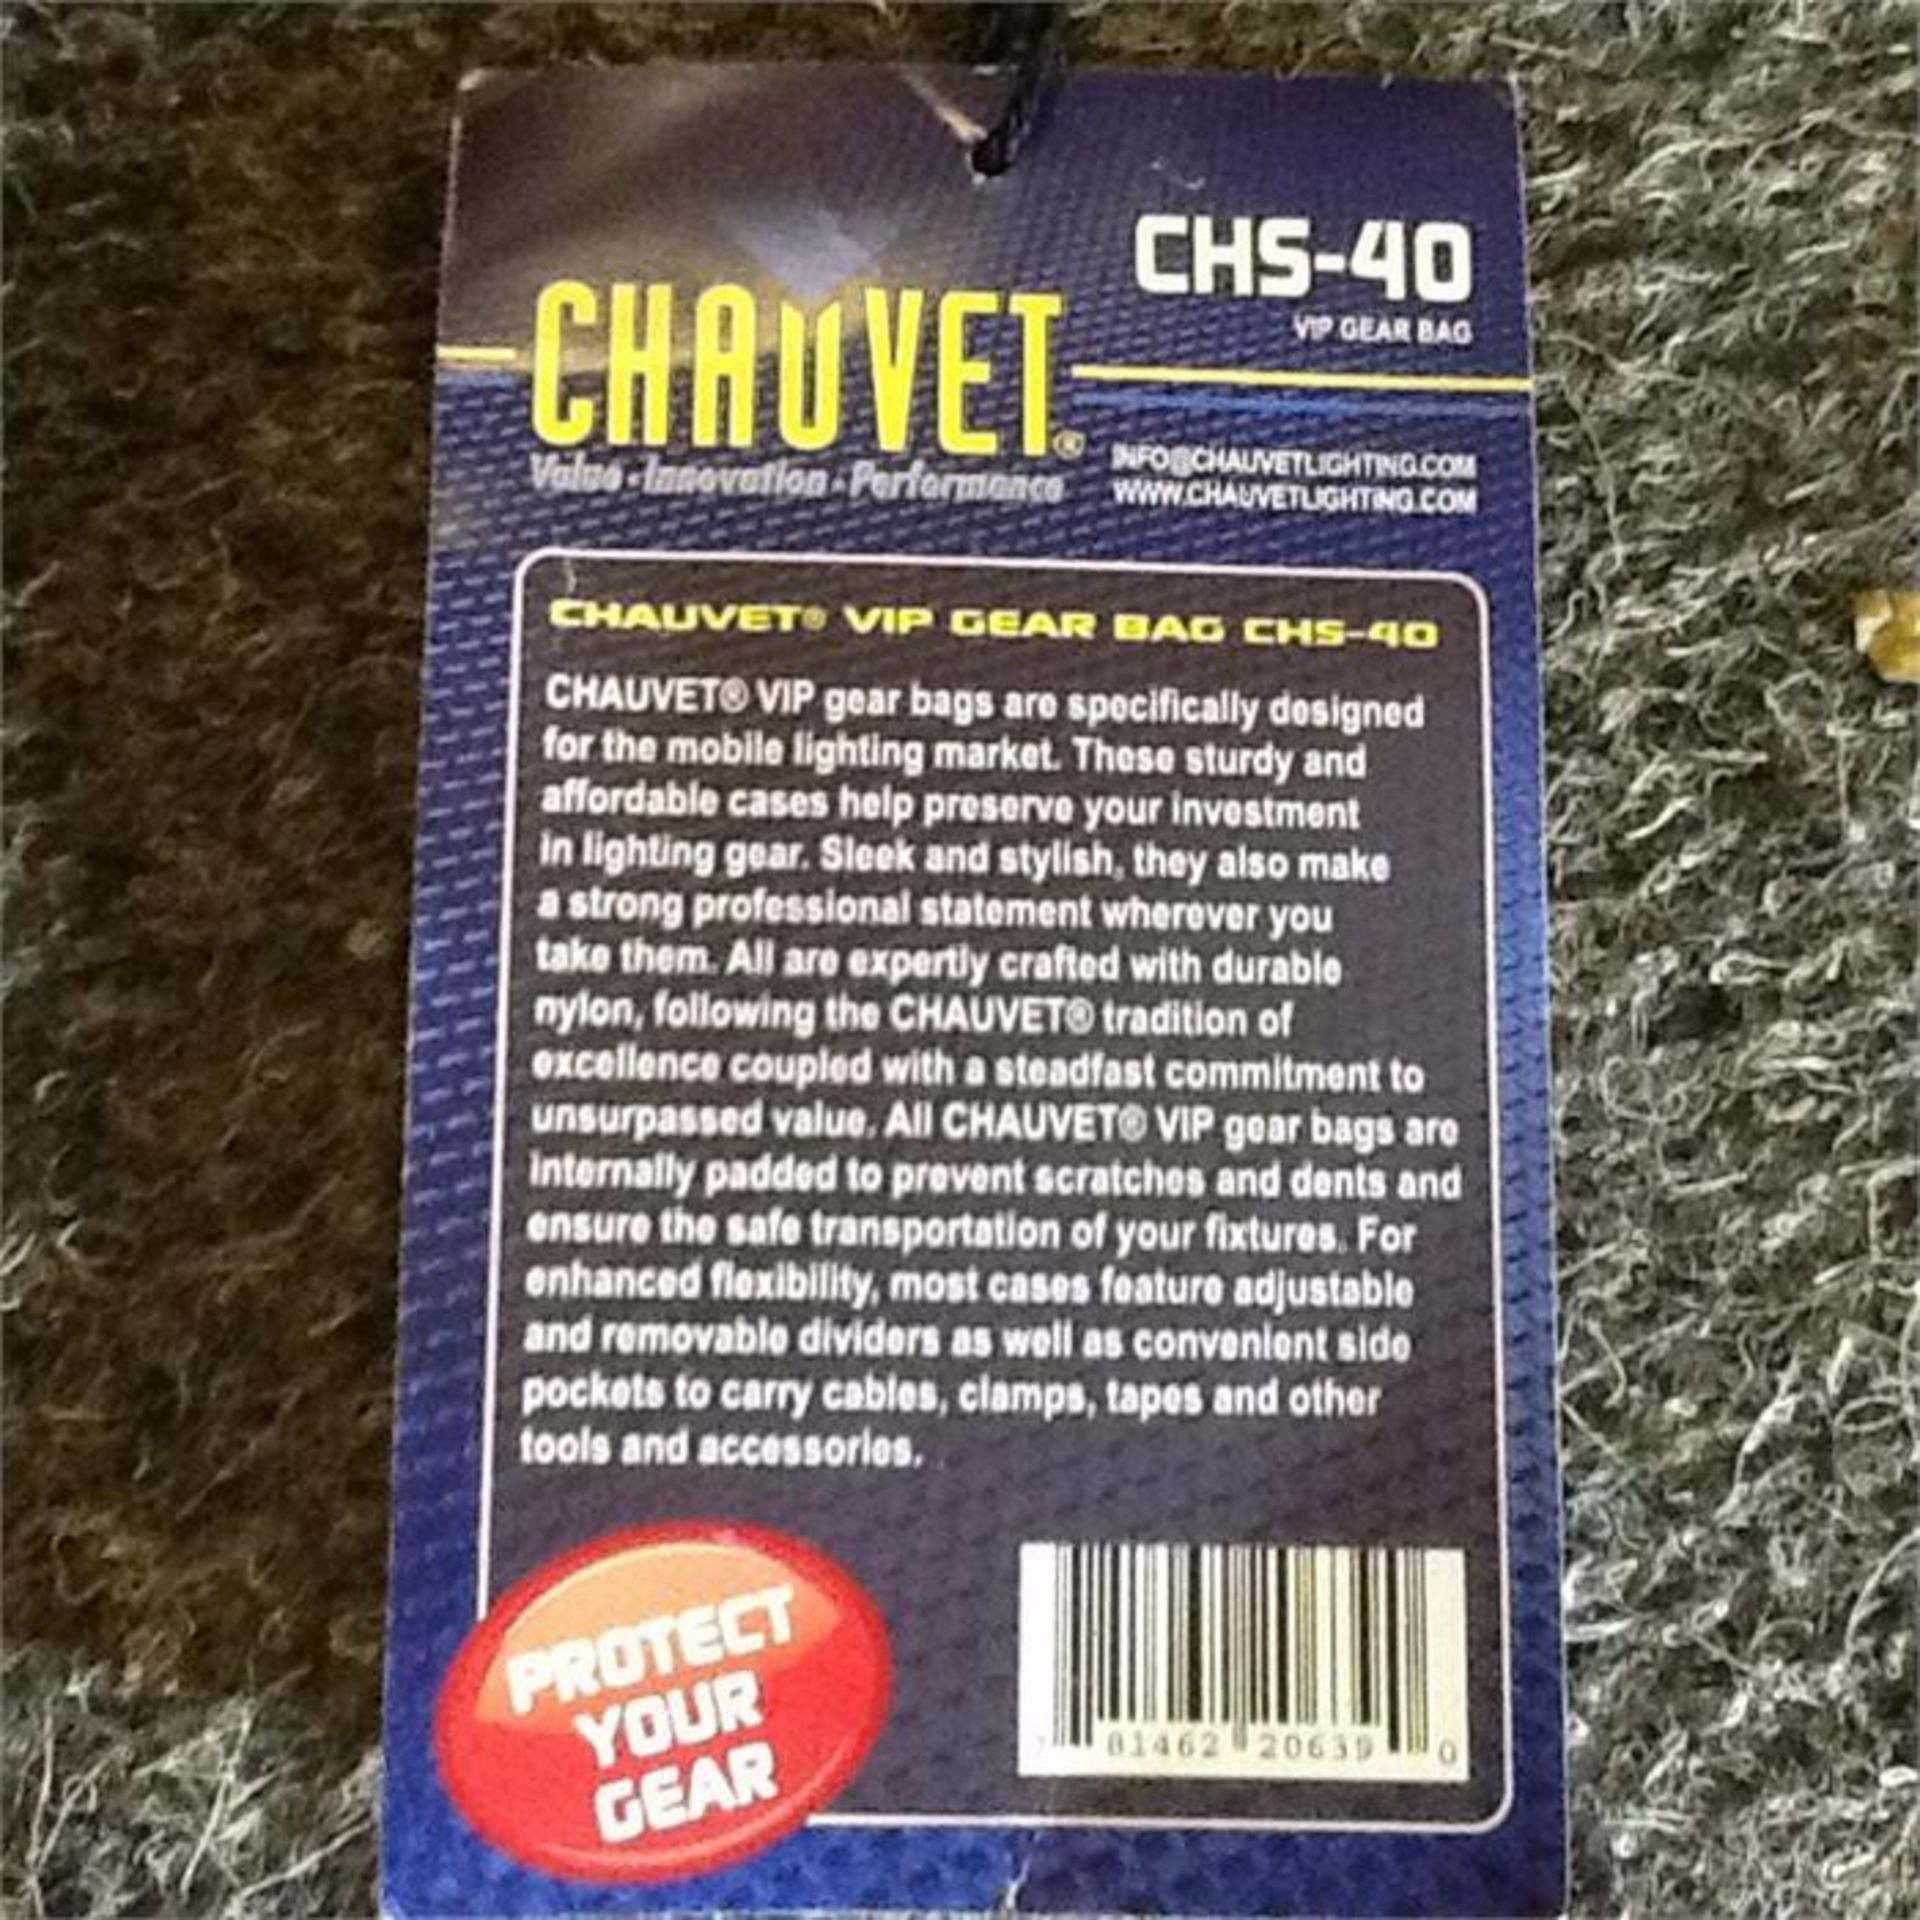 Chauvet  CHS-40 vip gear bag - Image 6 of 10